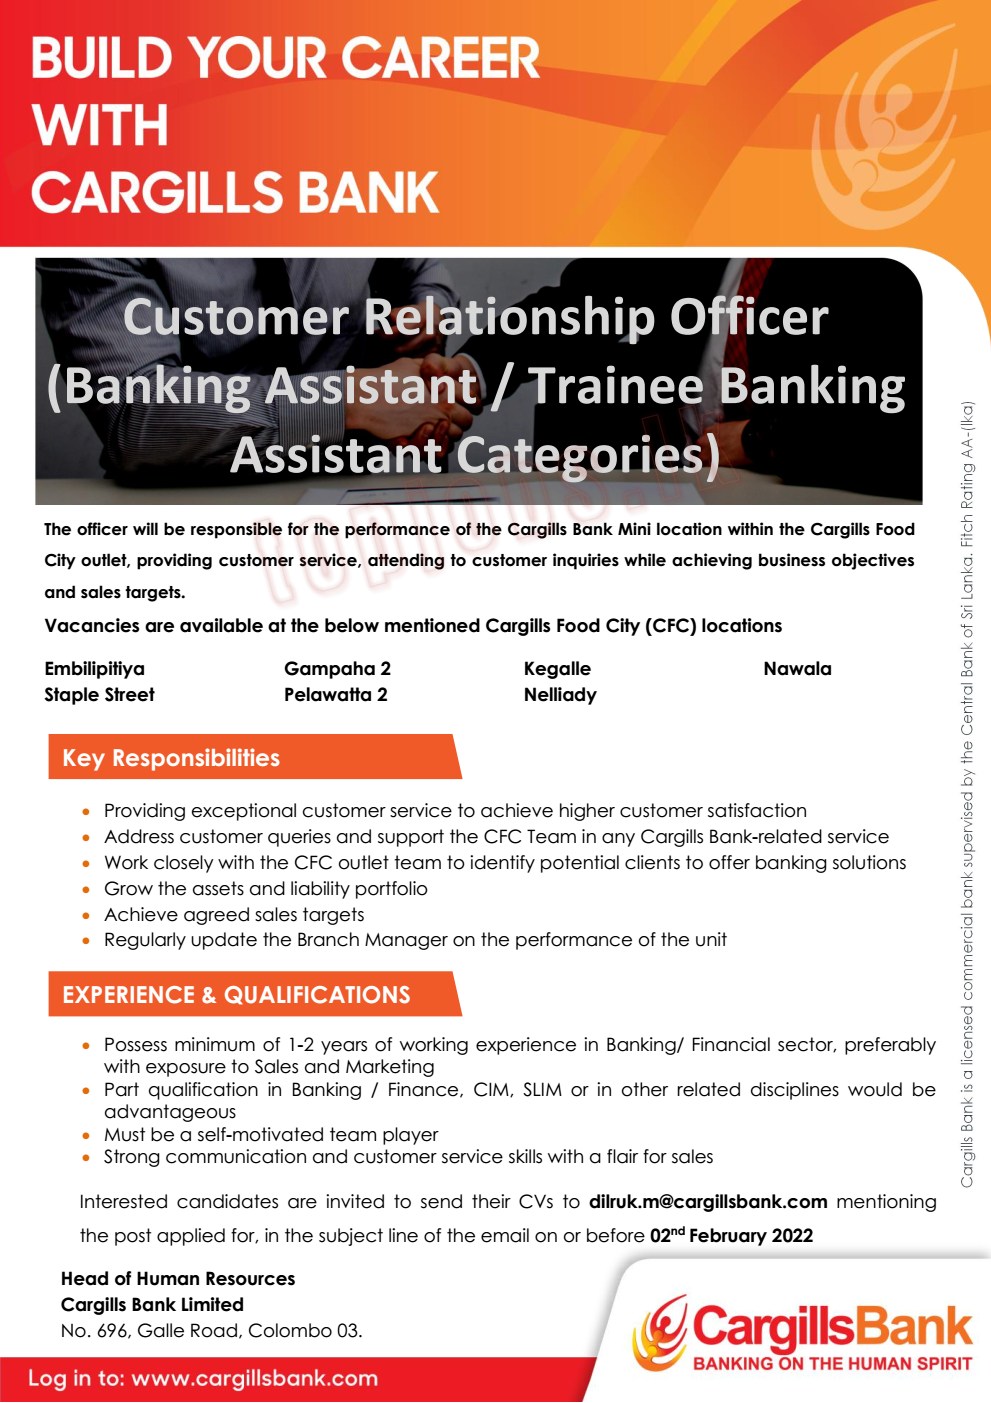 Customer Relationship Officer vacancies in Cargills Bank English Details